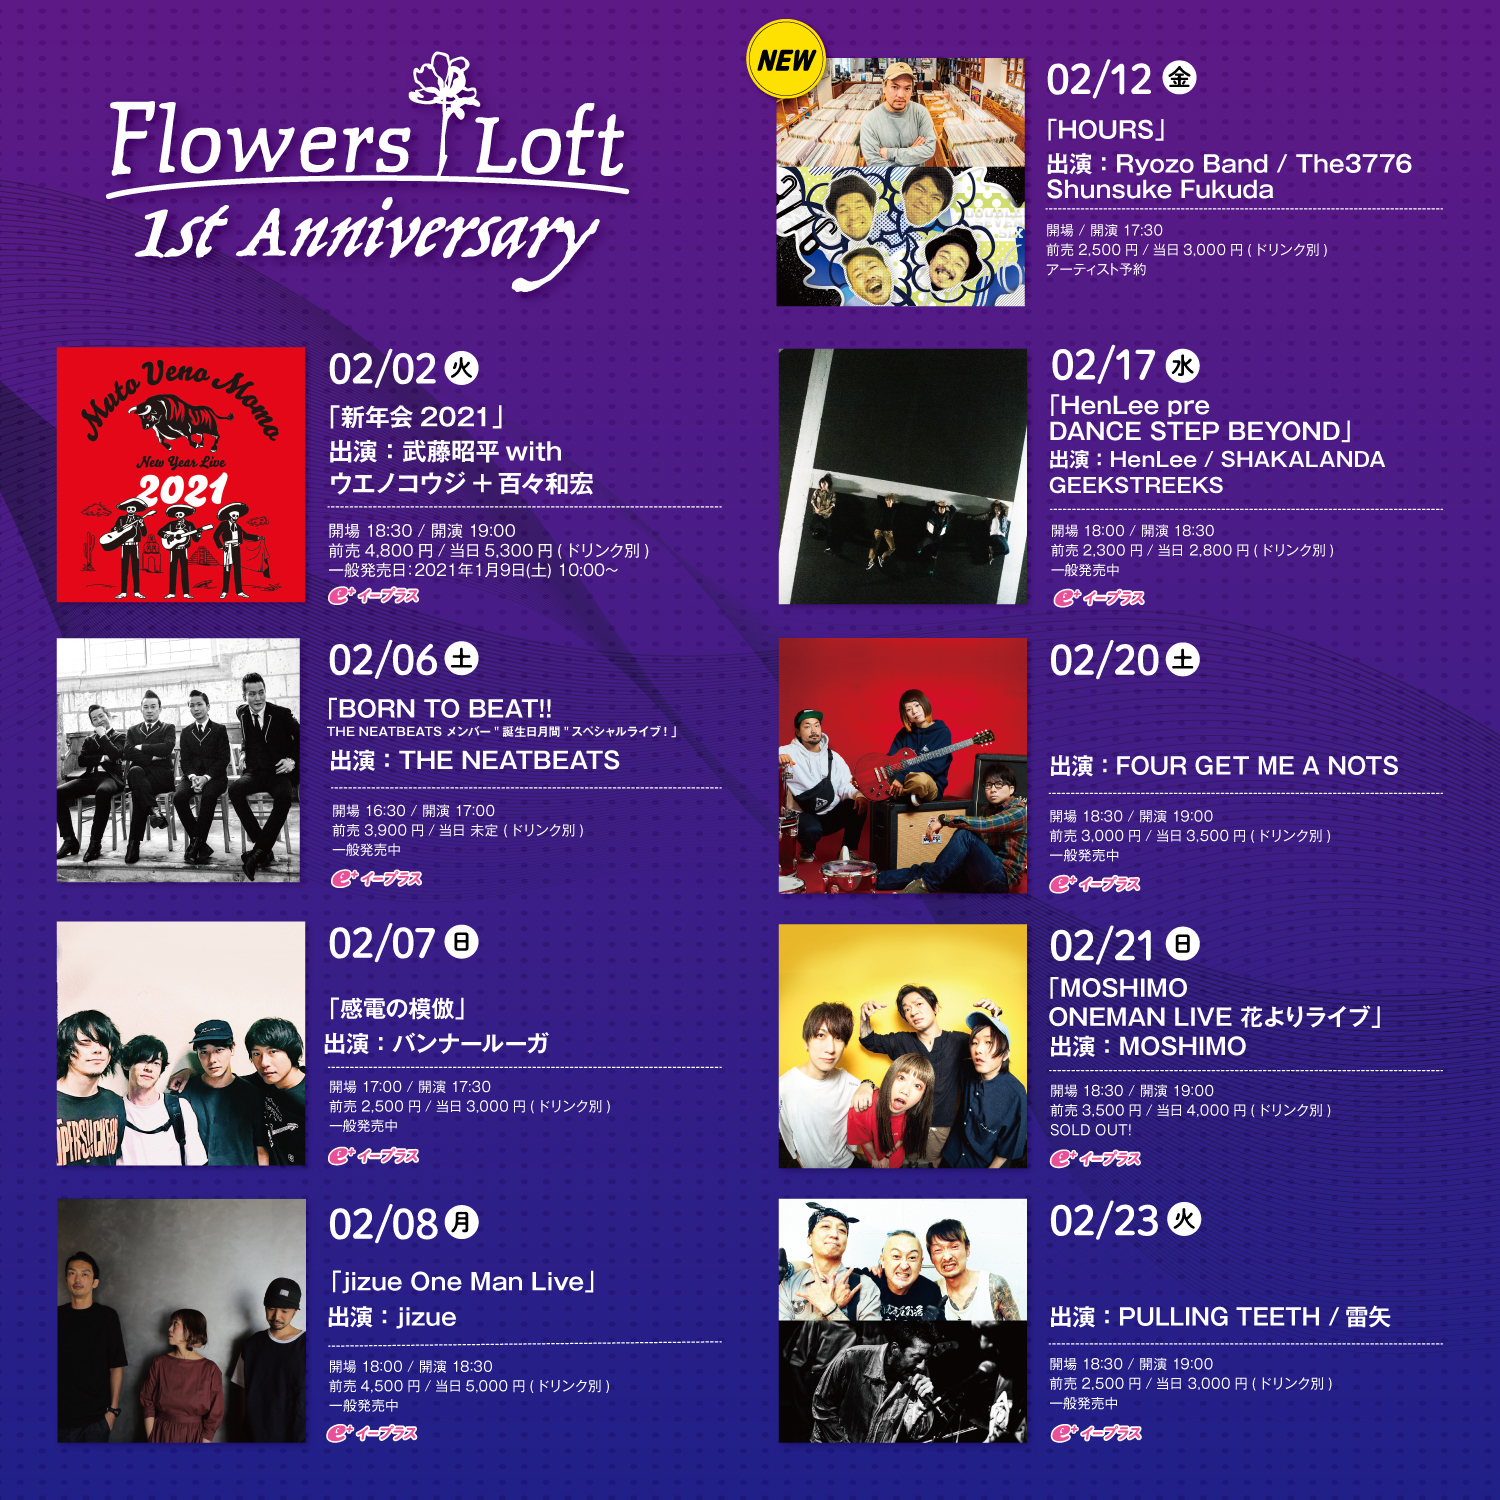 『Flowers Loft 1st Anniversary』フライヤー